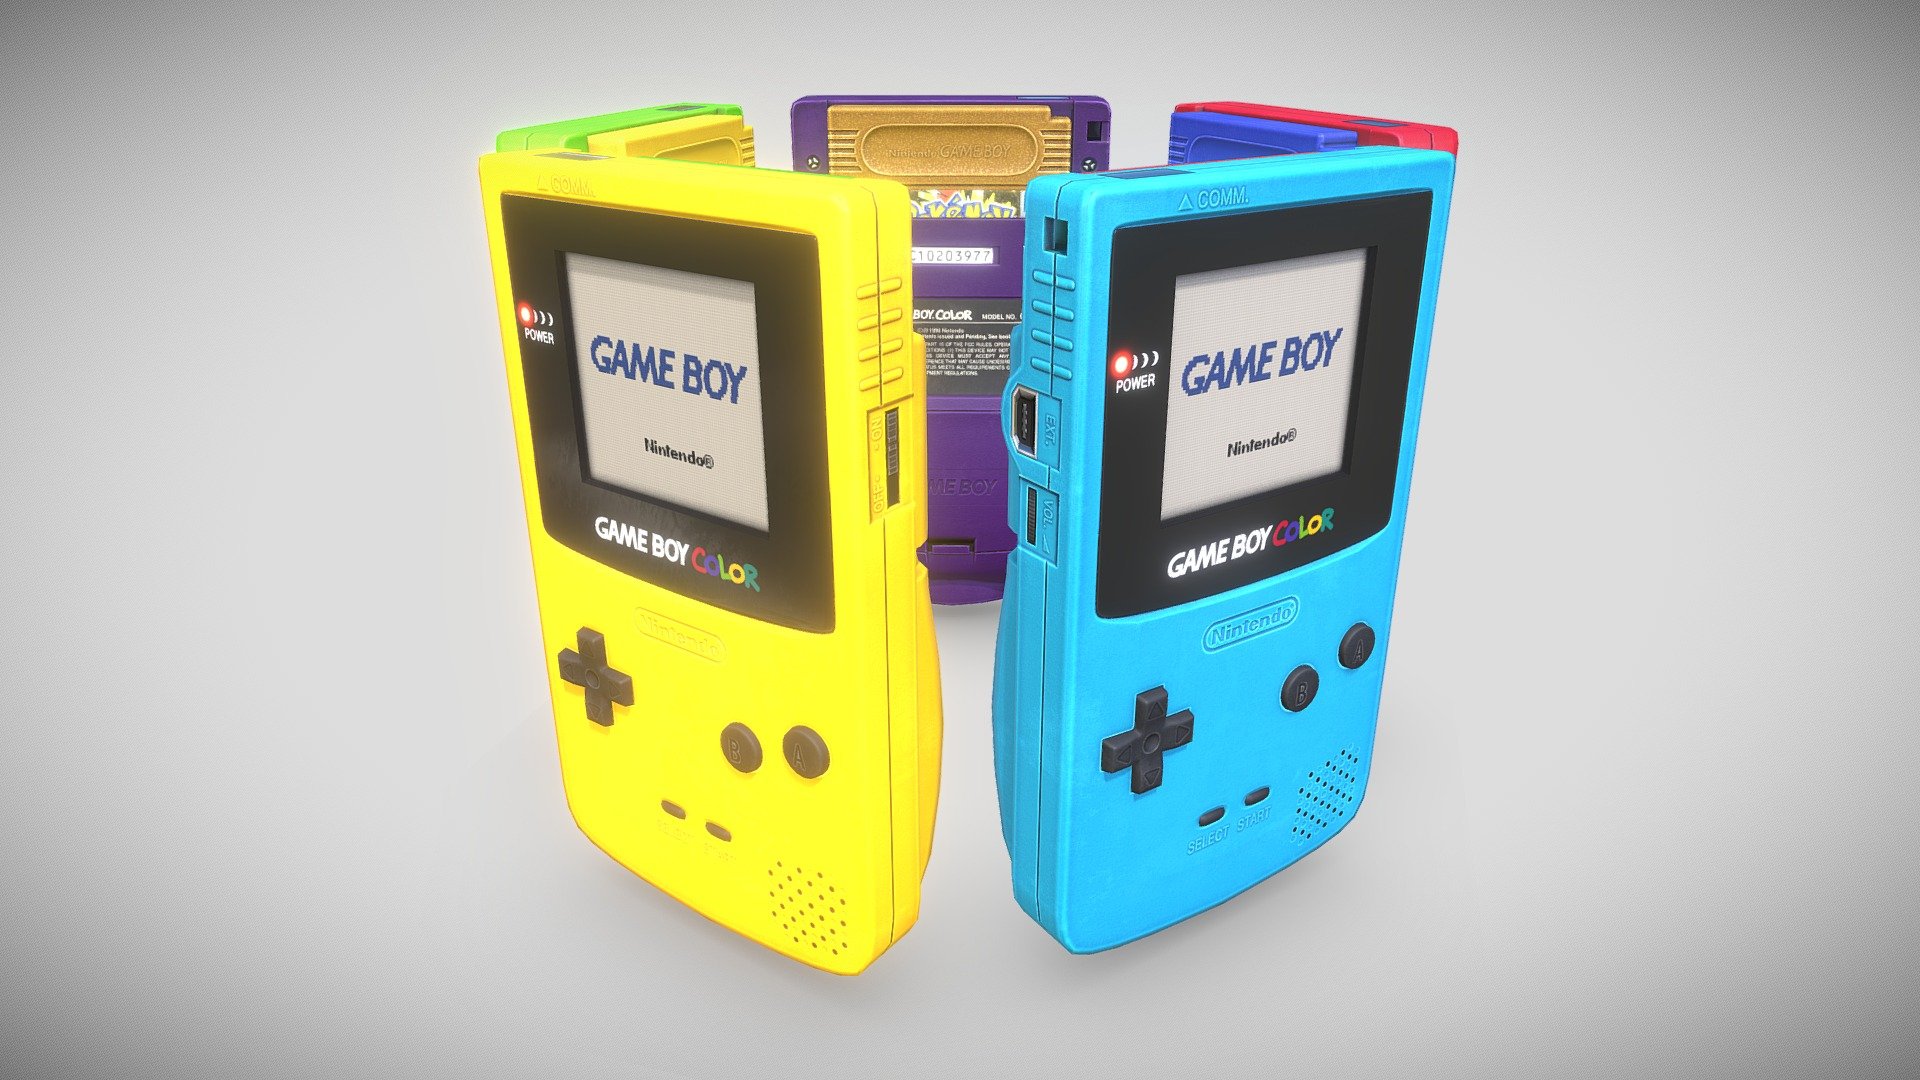 Нинтендо game boy Color. Game boy Color. Цвета Нинтендо. Реклама Нинтендо 90. Nintendo color